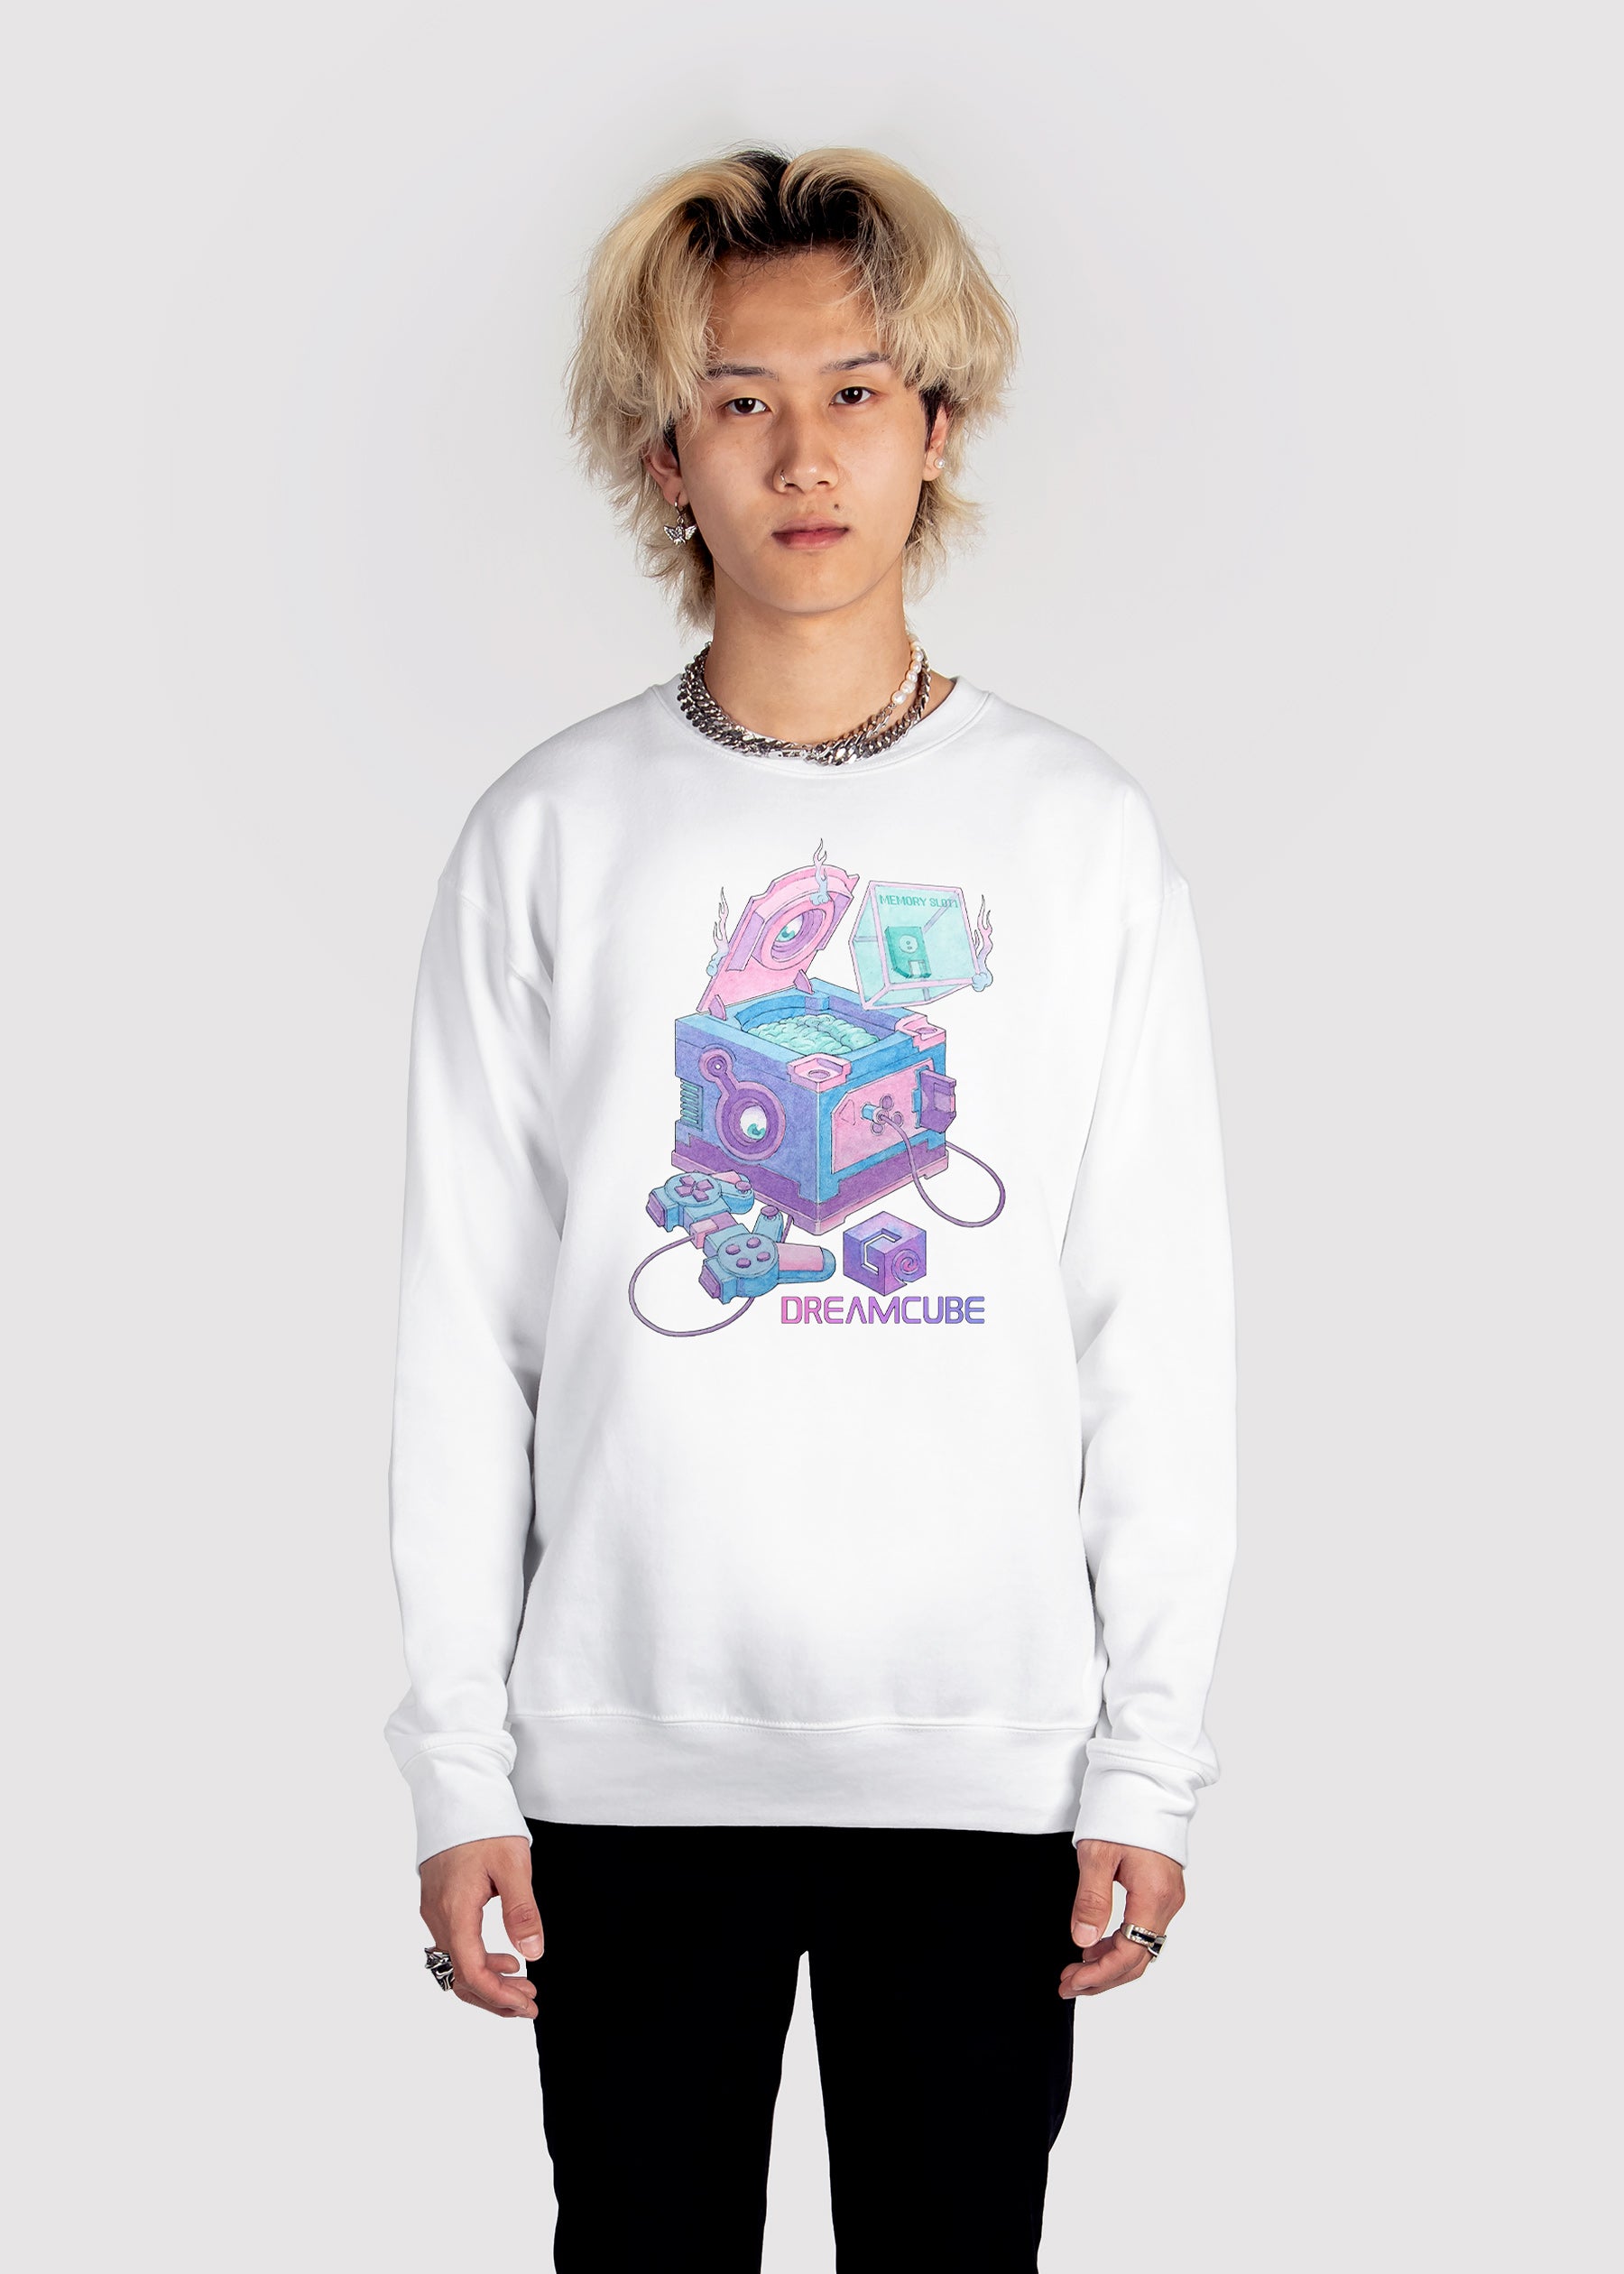 Dreamcube Sweatshirt